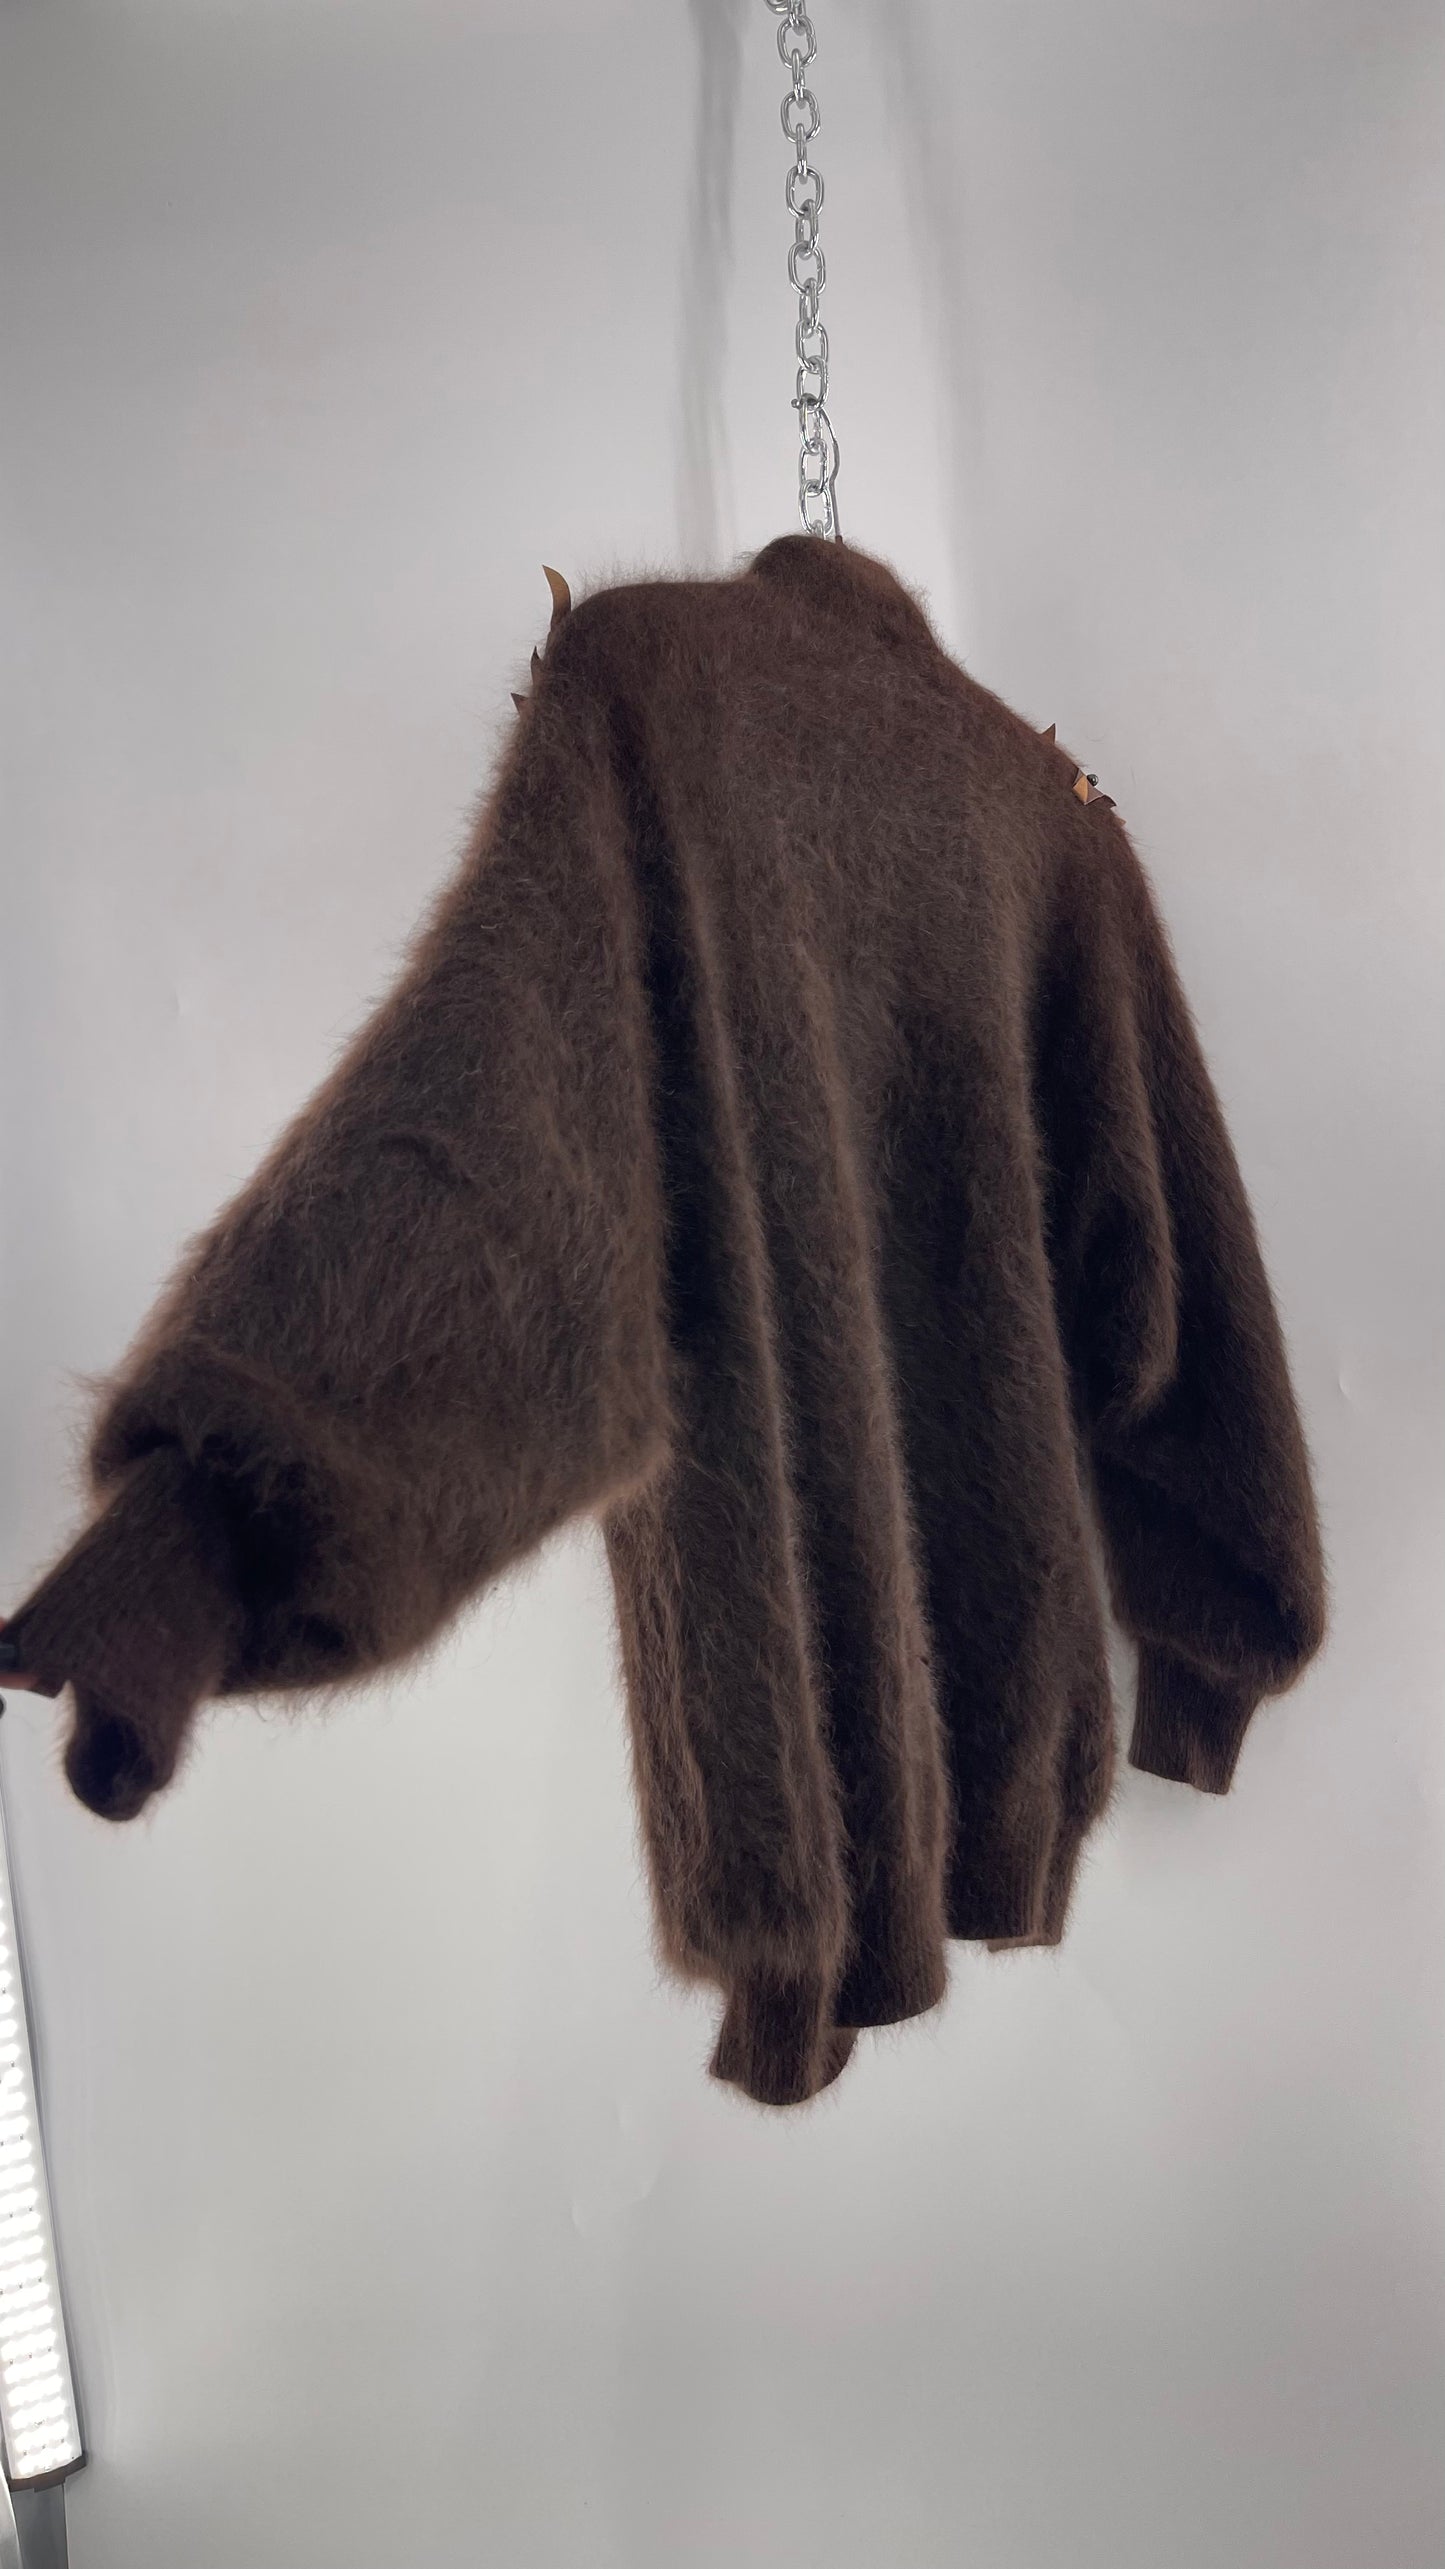 Liho Korean Vintage Brown Cardigan with Leather, Fur and Beaded Detailing 15% Wool 75% Angora  (C)(Medium)